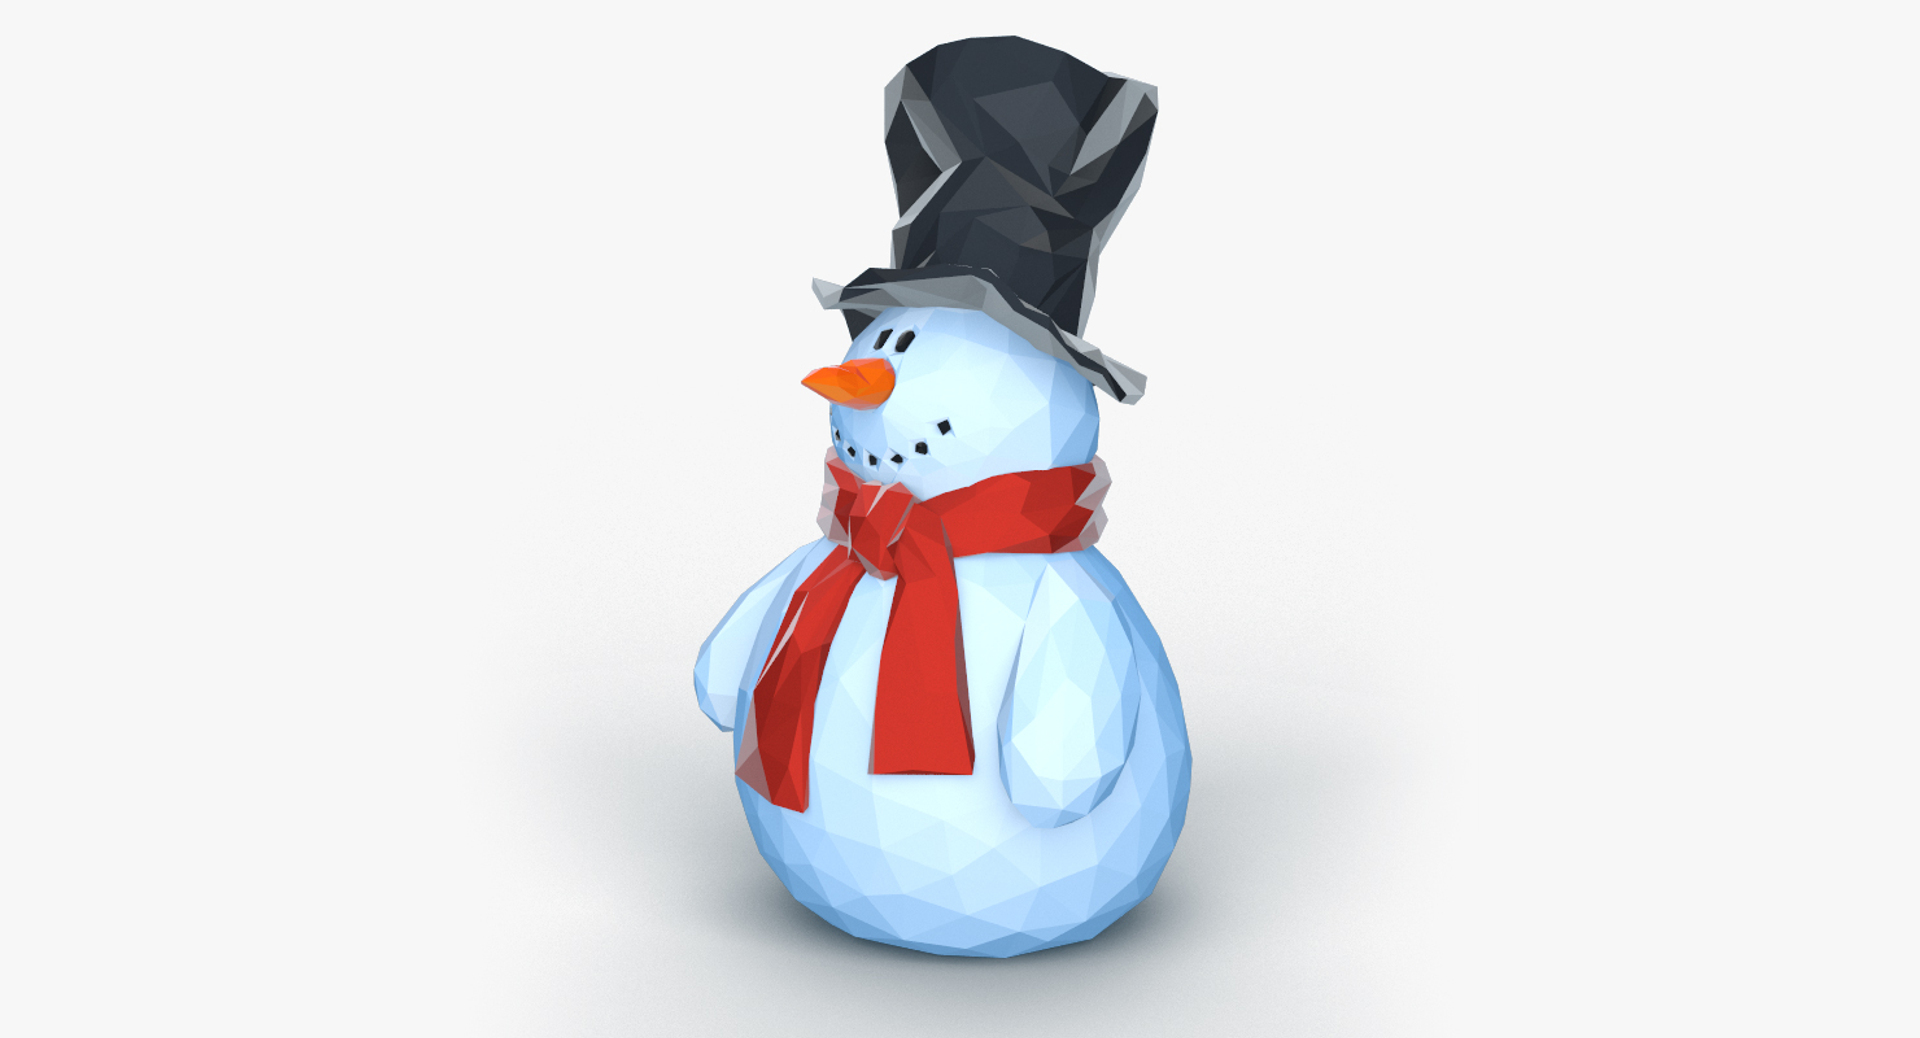 stylized snowman max https://p.turbosquid.com/ts-thumb/SM/Y391eC/VcNrui0N/main_color/jpg/1481114253/1920x1080/turn_fit_q99/12a2ef42a9942635cd1a8f26e58cc37ad3dc7583/main_color-1.jpg